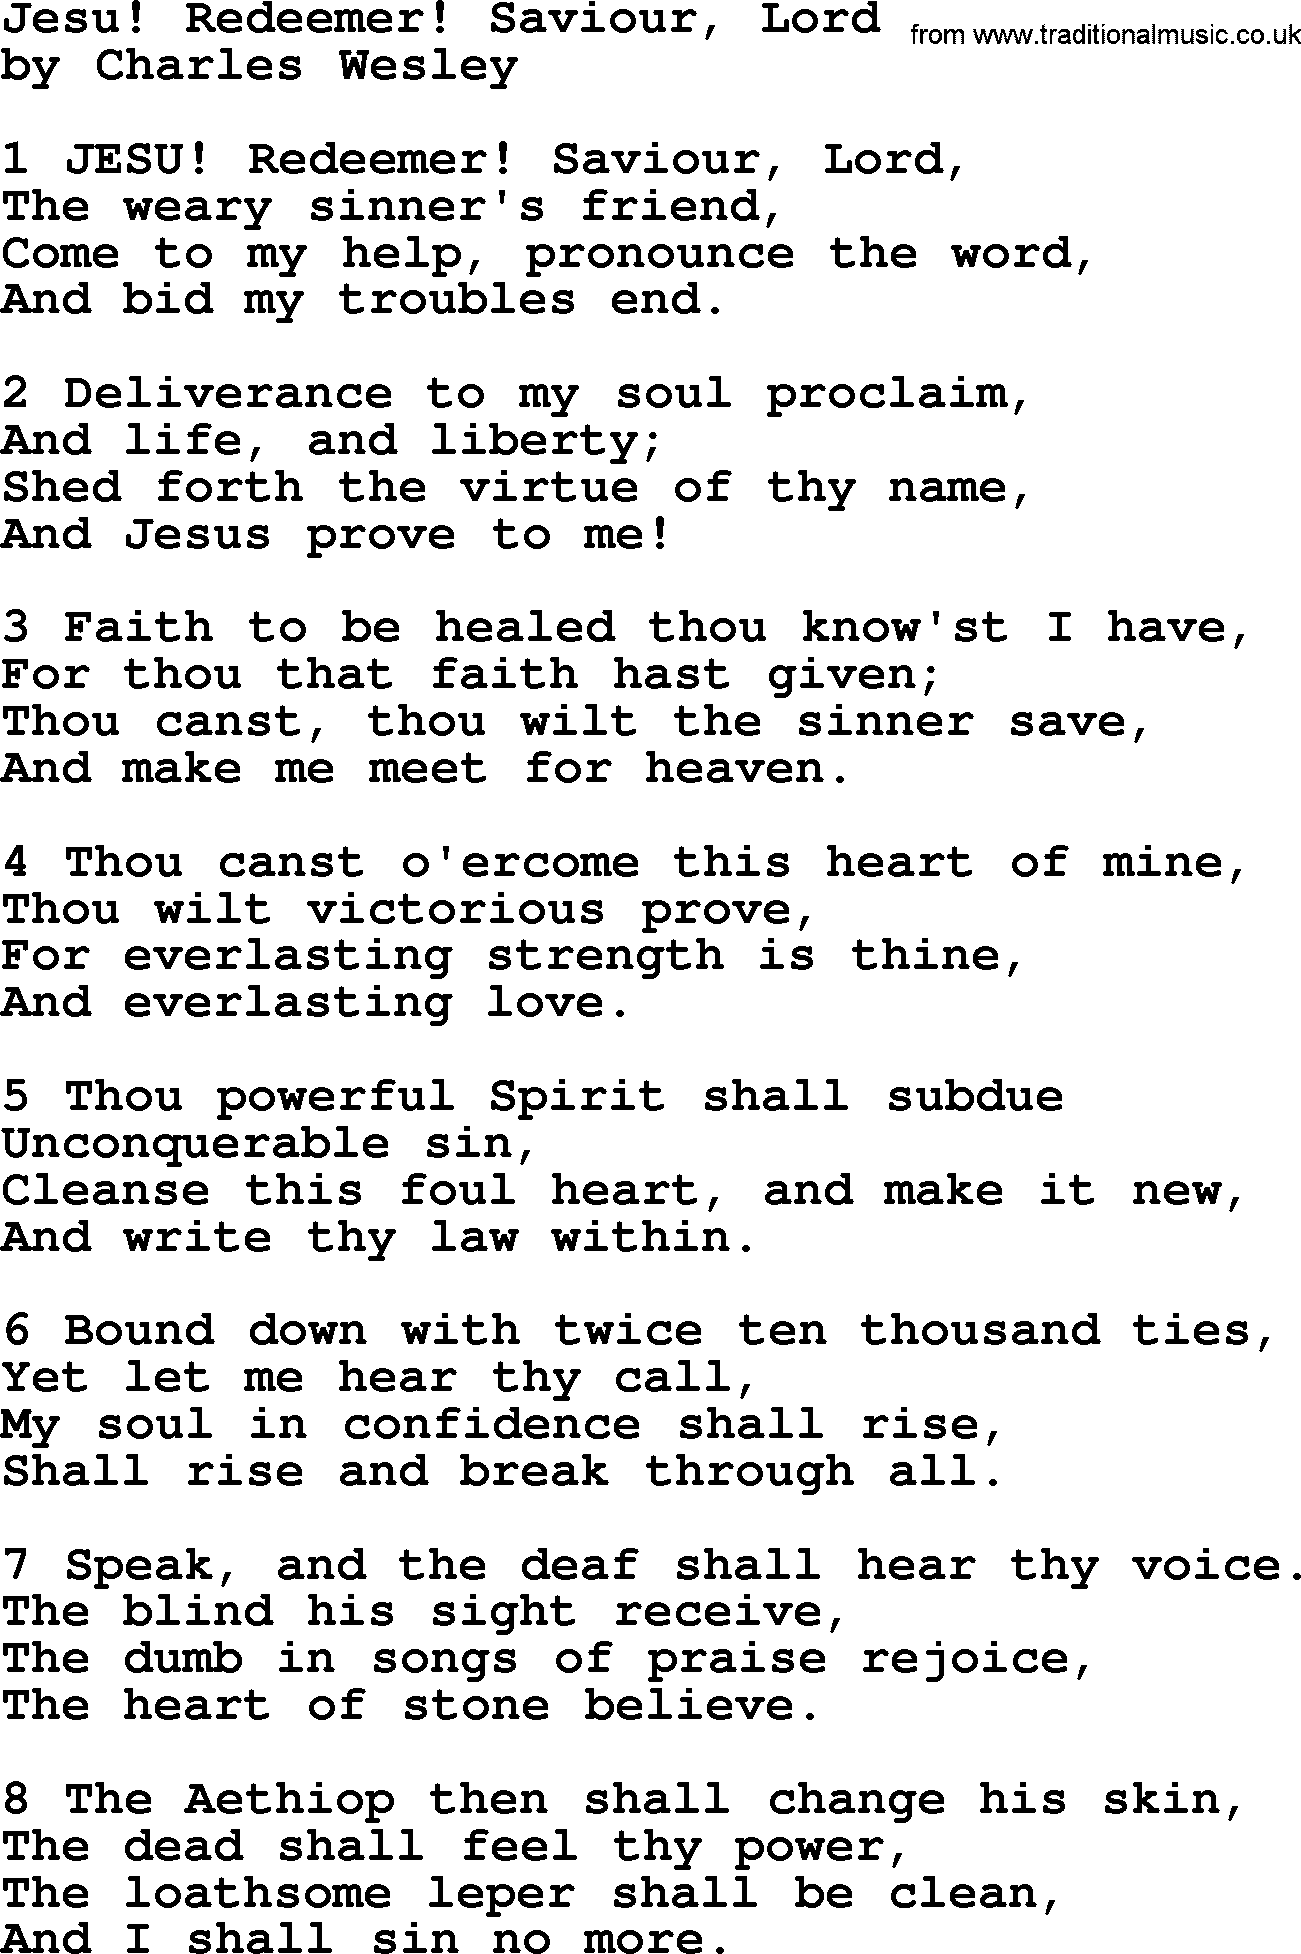 Charles Wesley hymn: Jesu! Redeemer! Saviour, Lord, lyrics